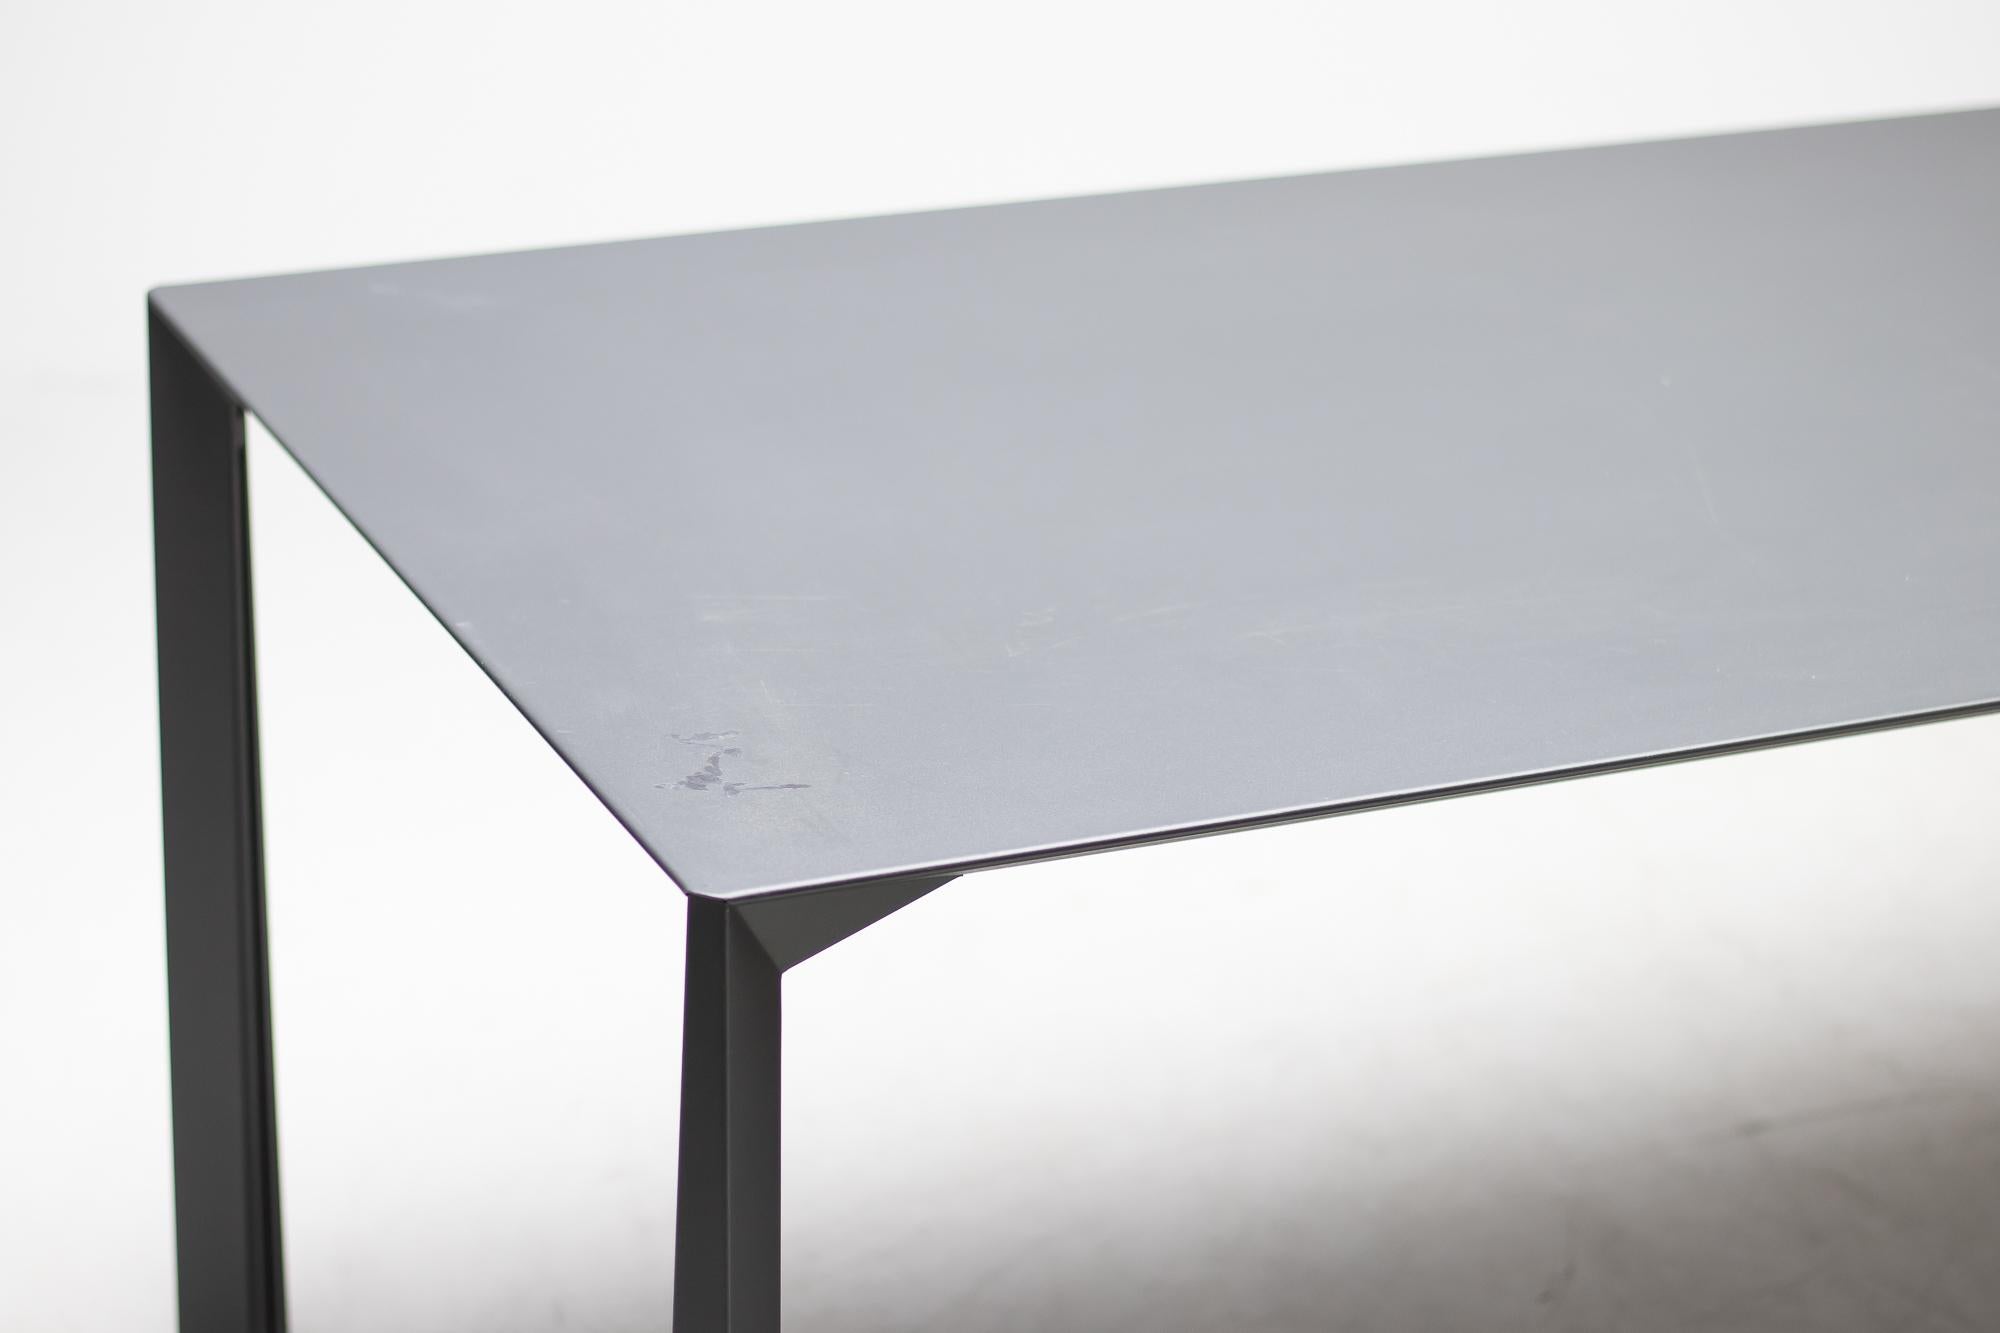 Steel Ovidio Table by Francisco Gomez Paz for Danese Milano